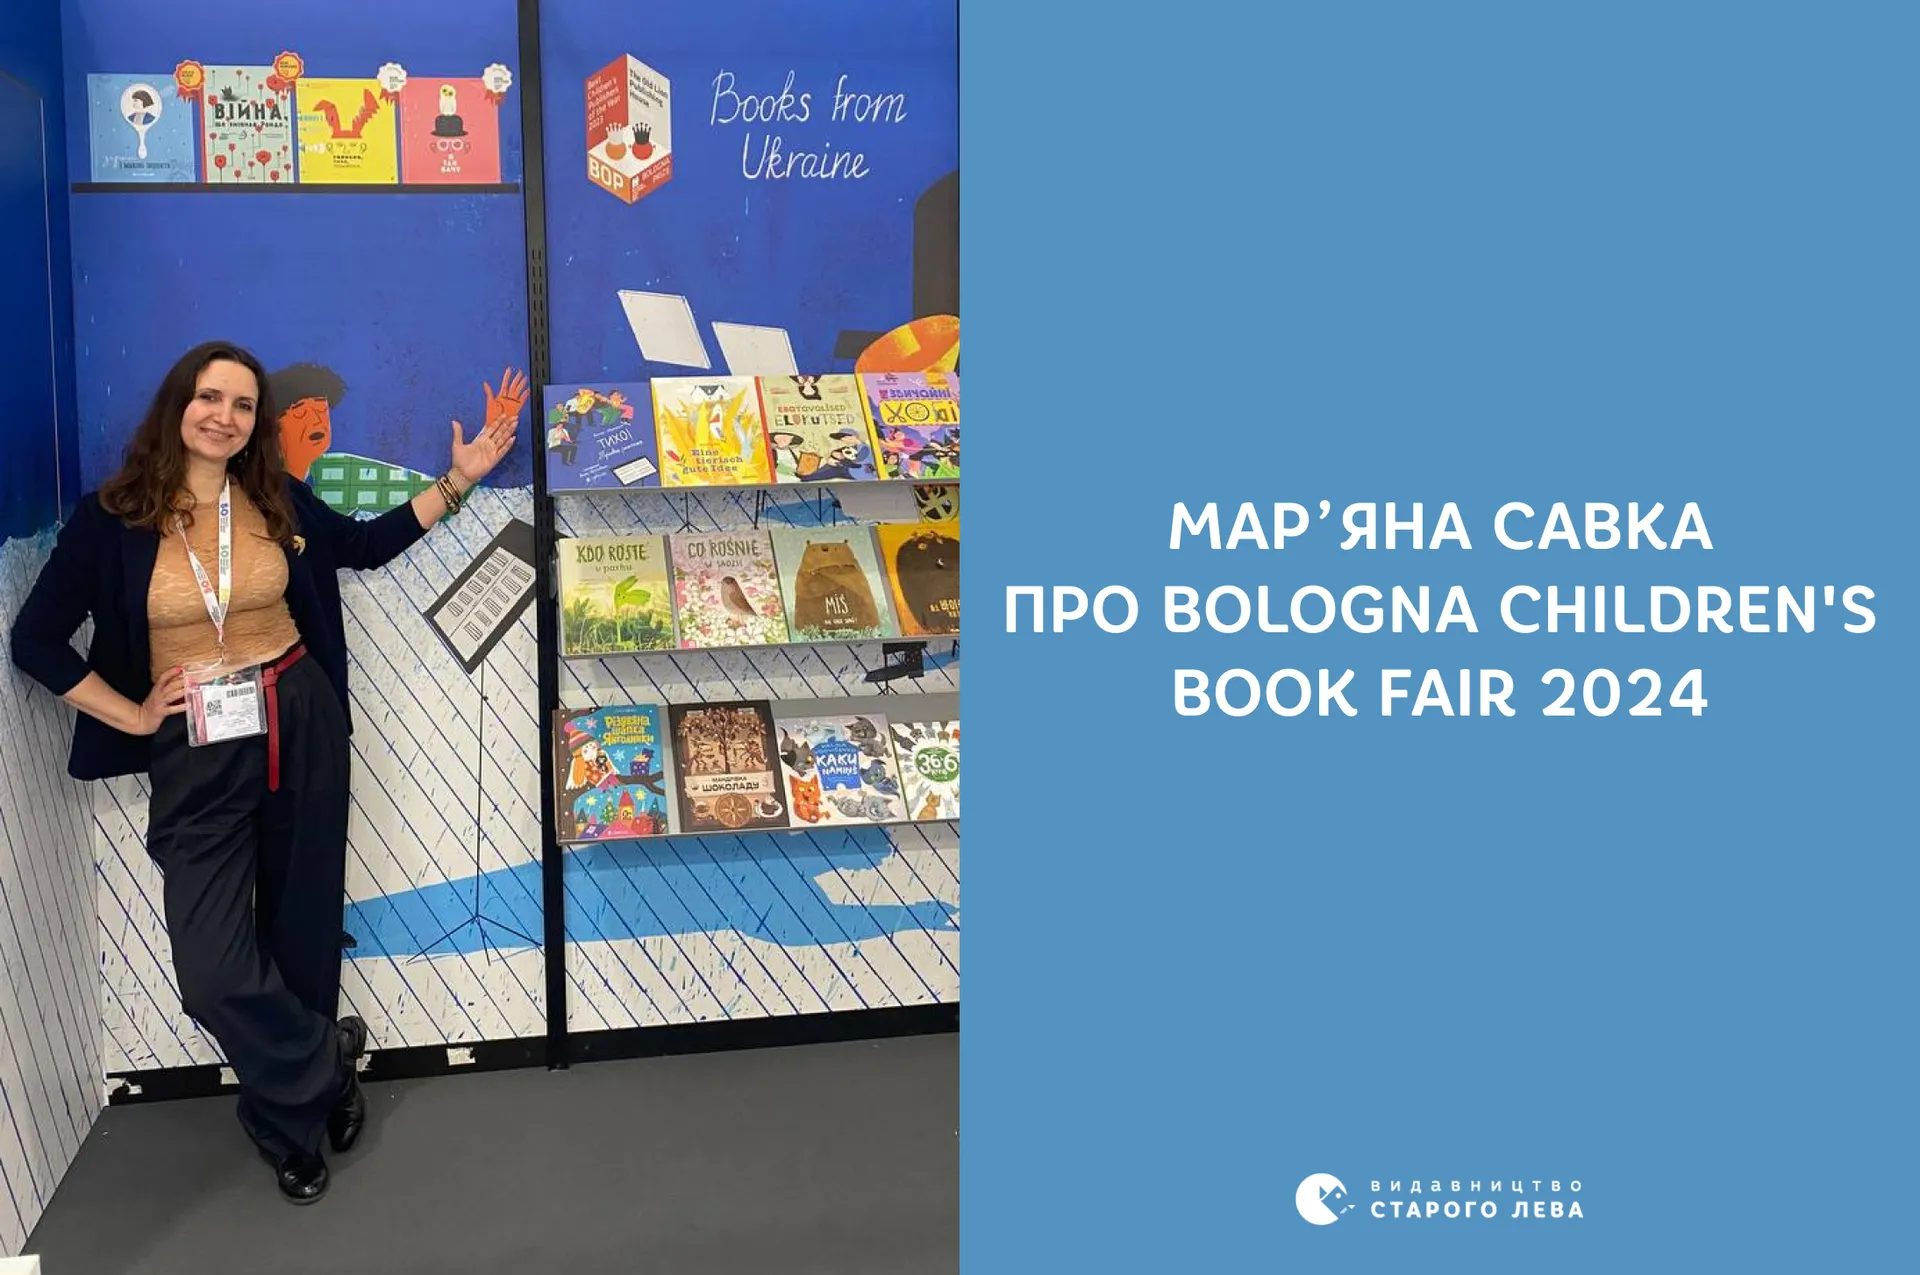 Марʼяна Савка про Bologna Children's Book Fair 2024